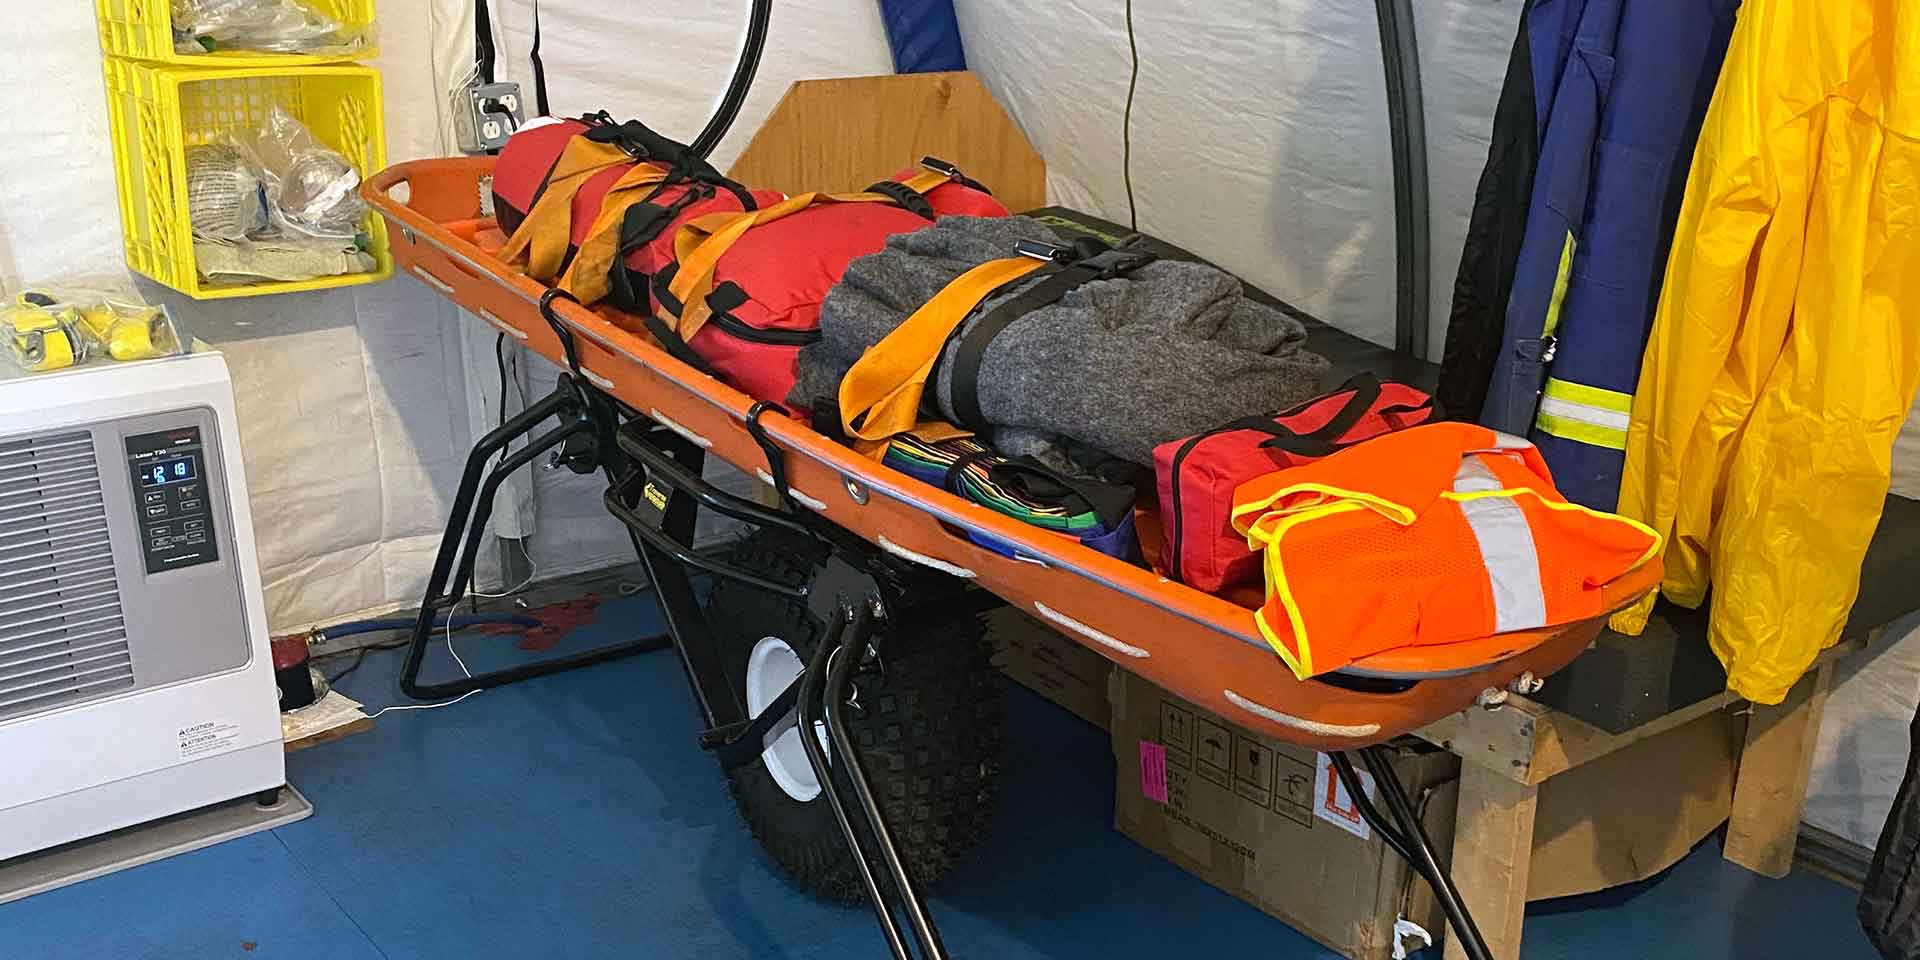 Emergency stretcher with emergency supplies